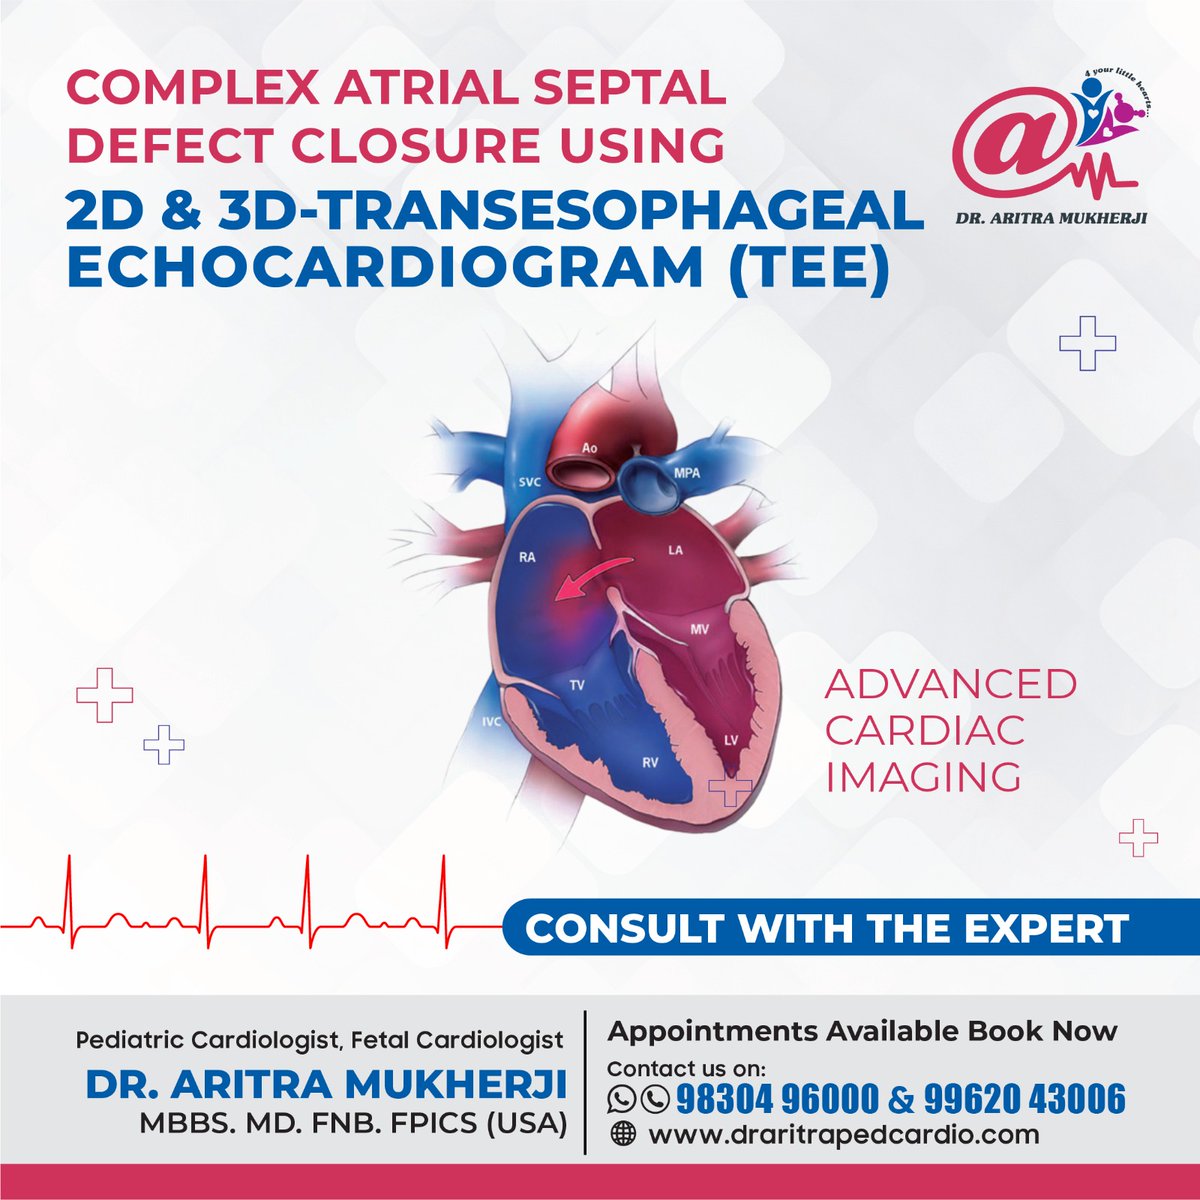 'Complex Atrial Septal Defect Closure' 
To know more, consult the specialist...
draritrapedcardio.com